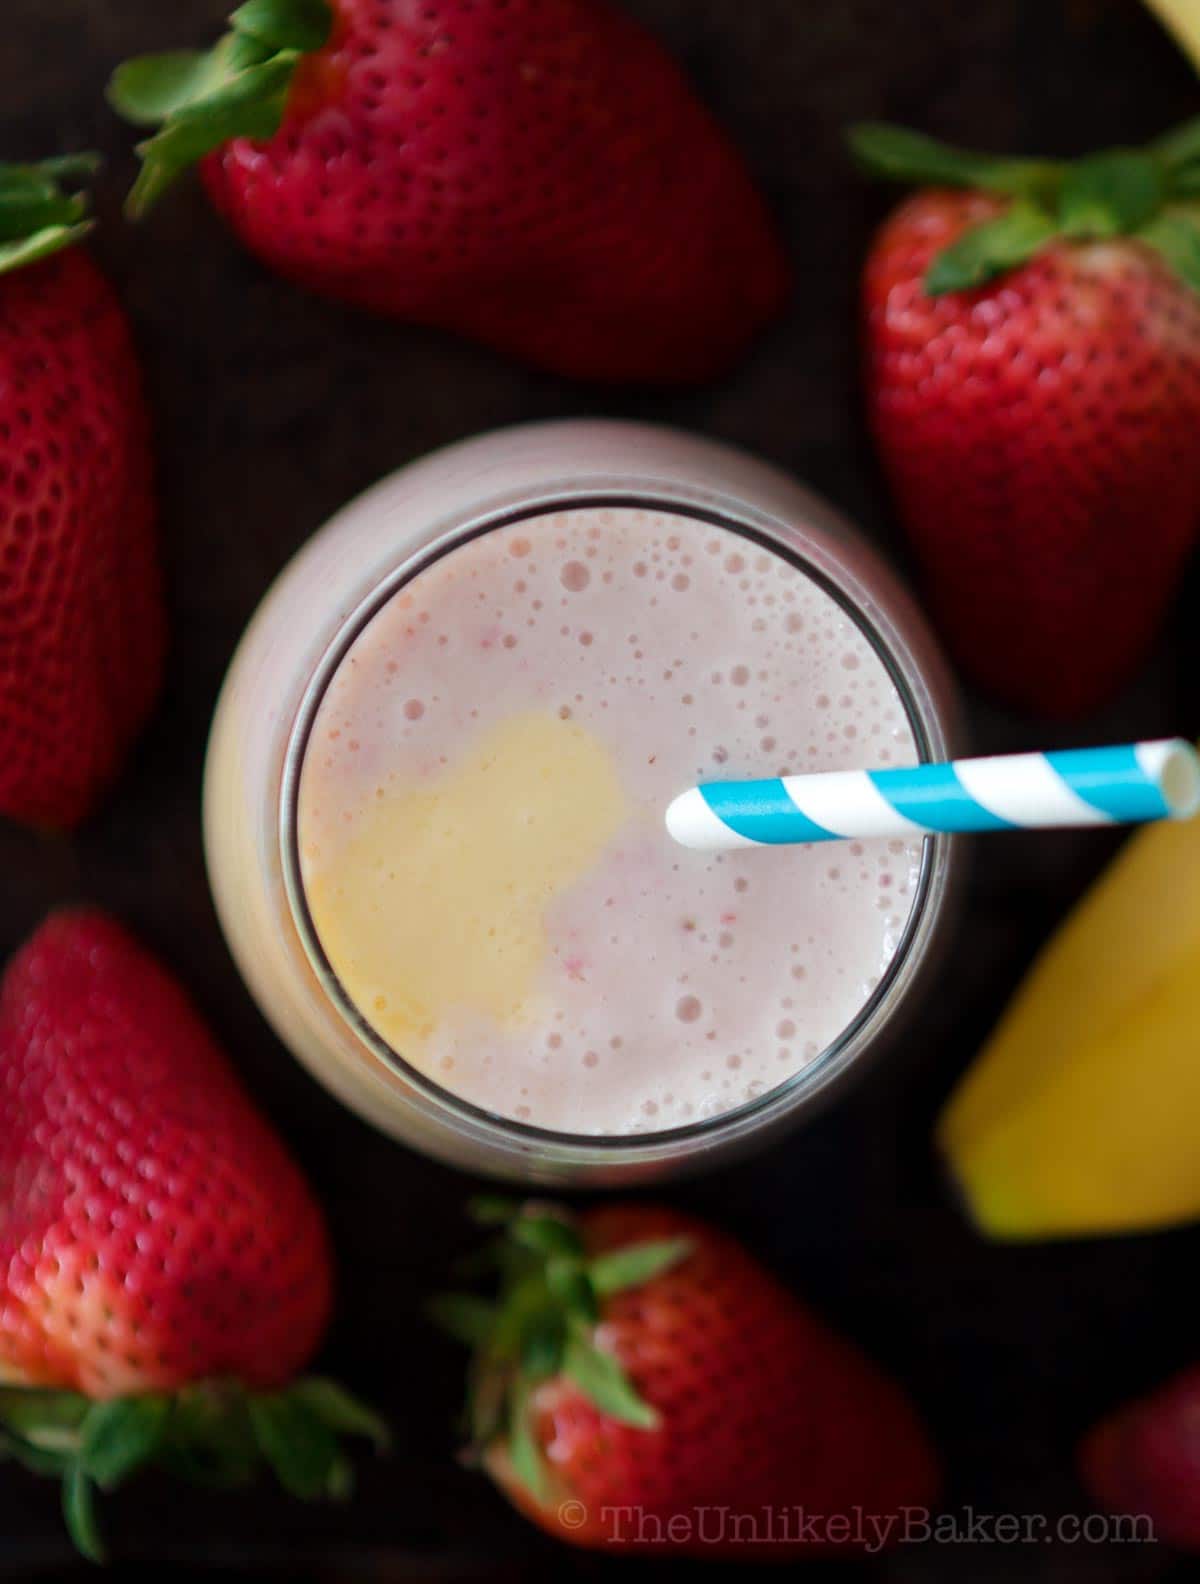 Refreshing strawberry mango banana smoothie in a glass.